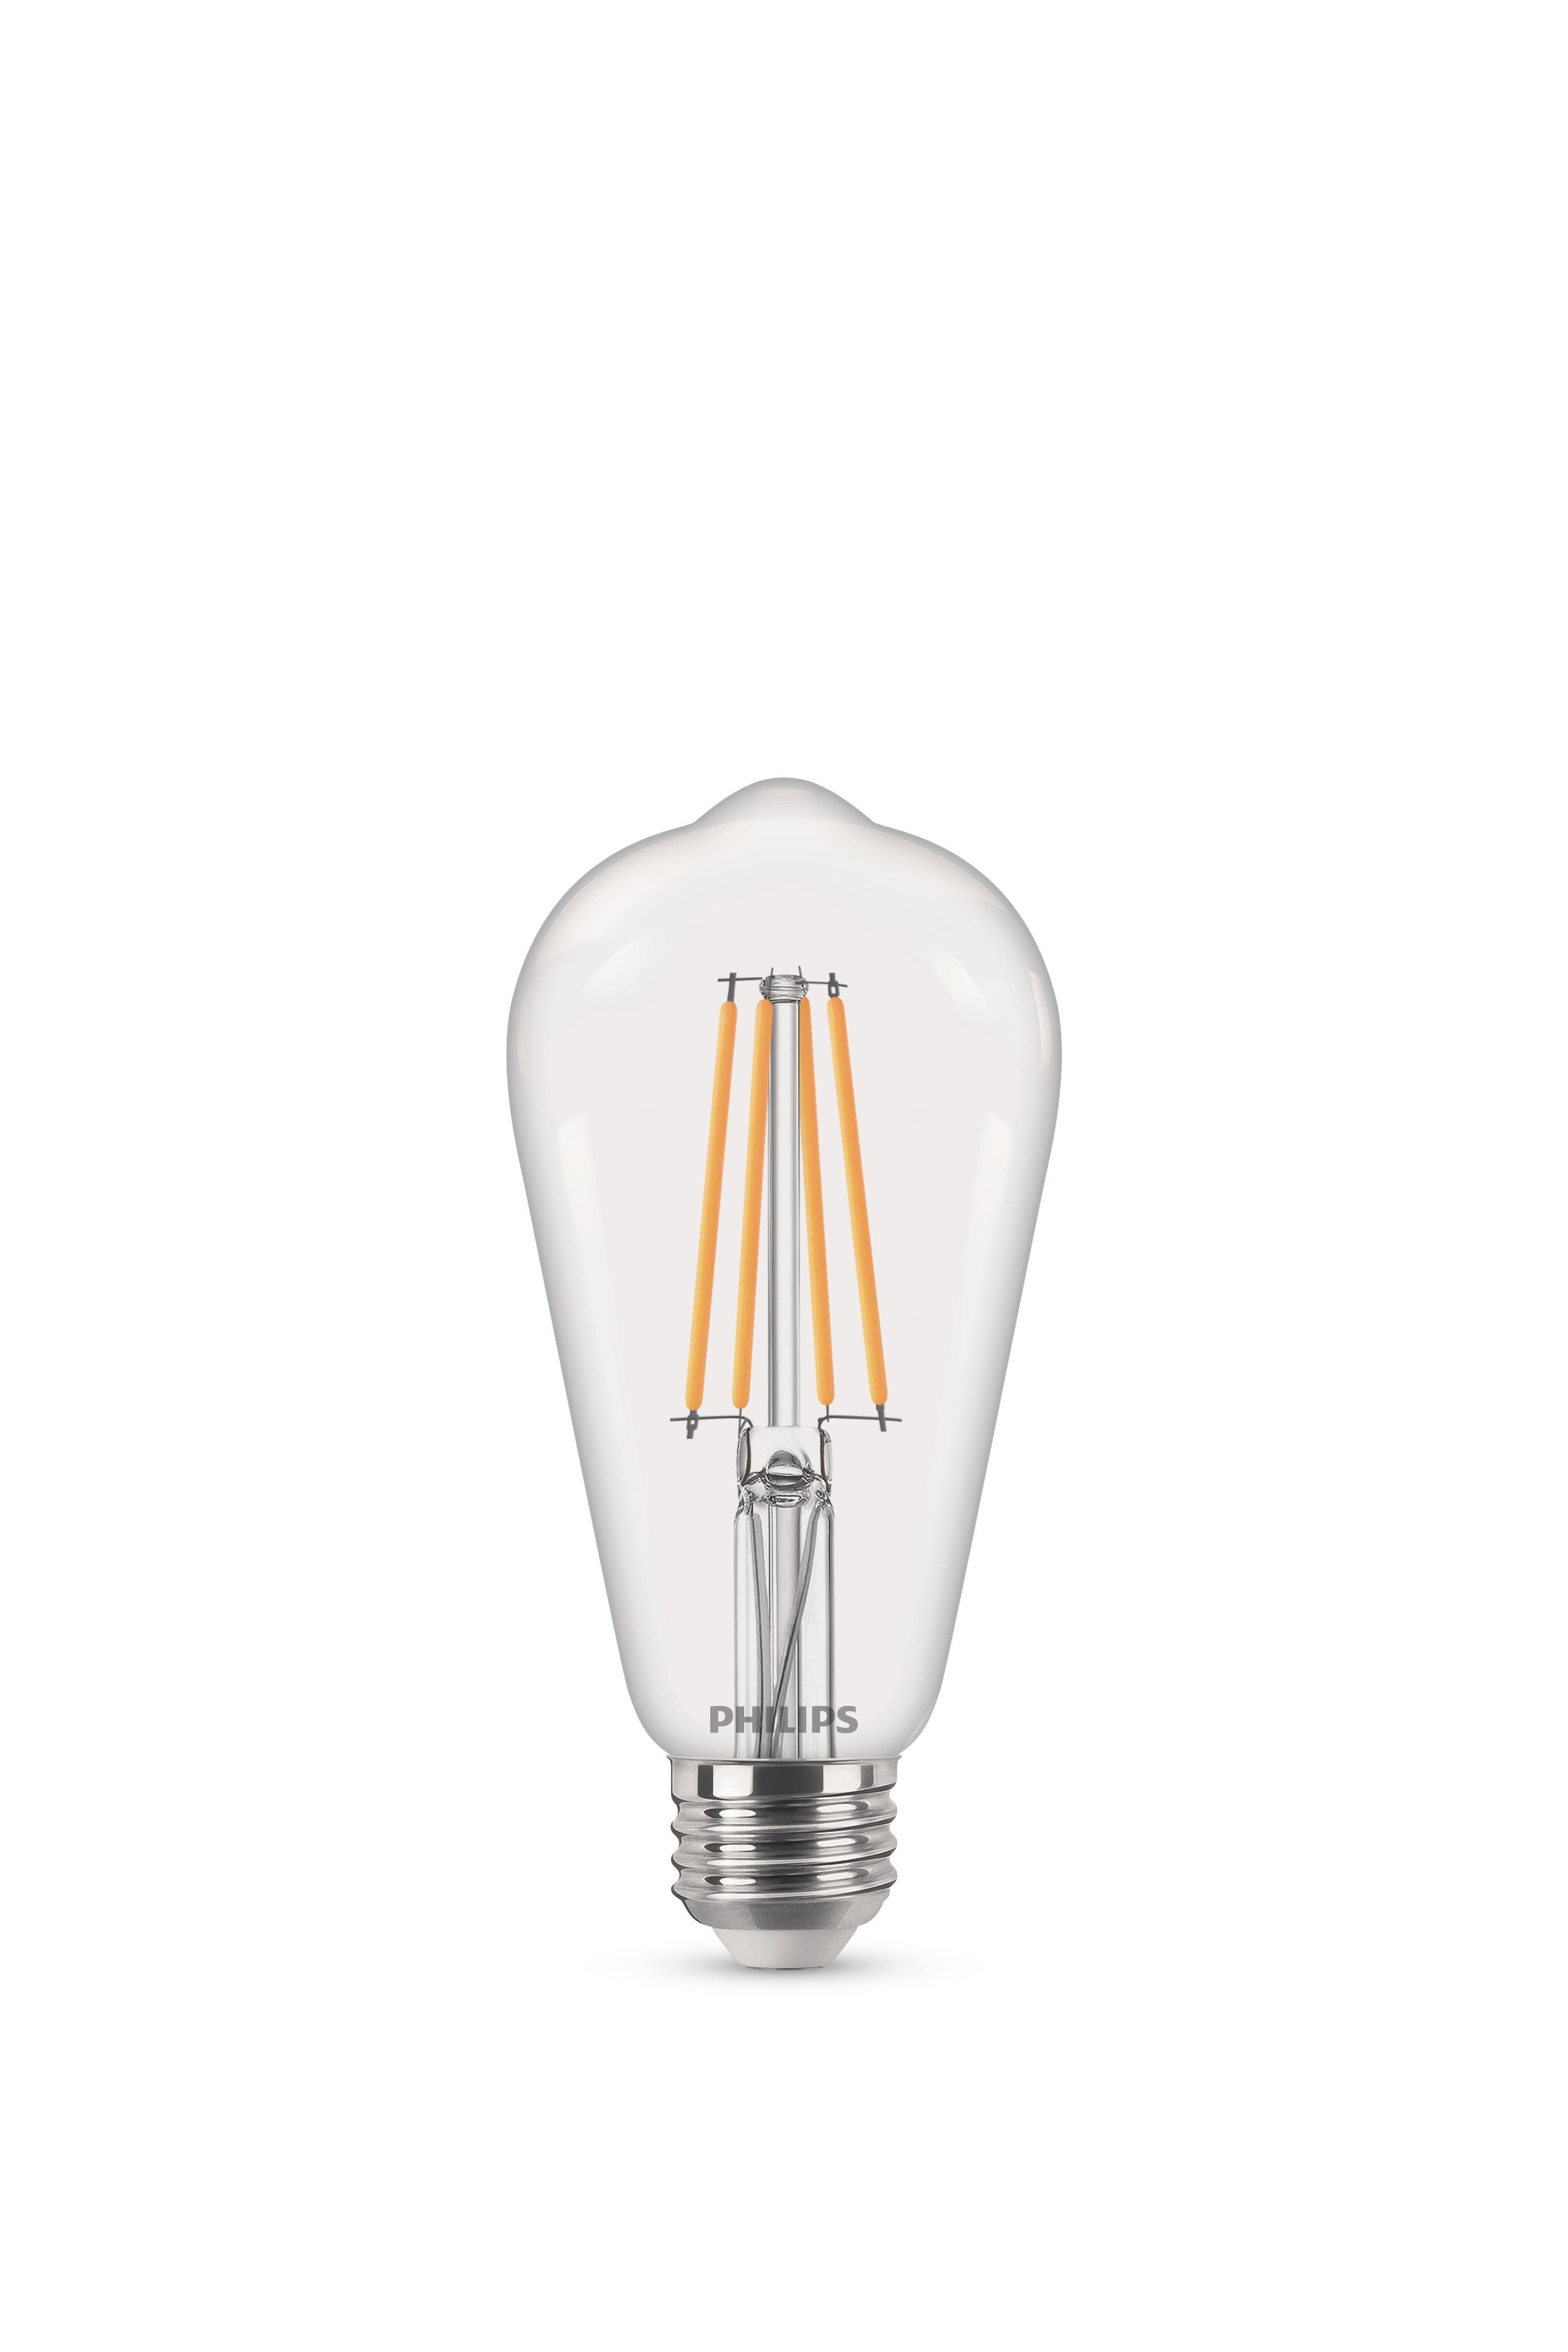 Philips Vintage LED 60-Watt ST19 Filament Light Bulb, Soft White Warm Glow, Dimmable, E26 Medium Base (1-Pack) - Walmart.com